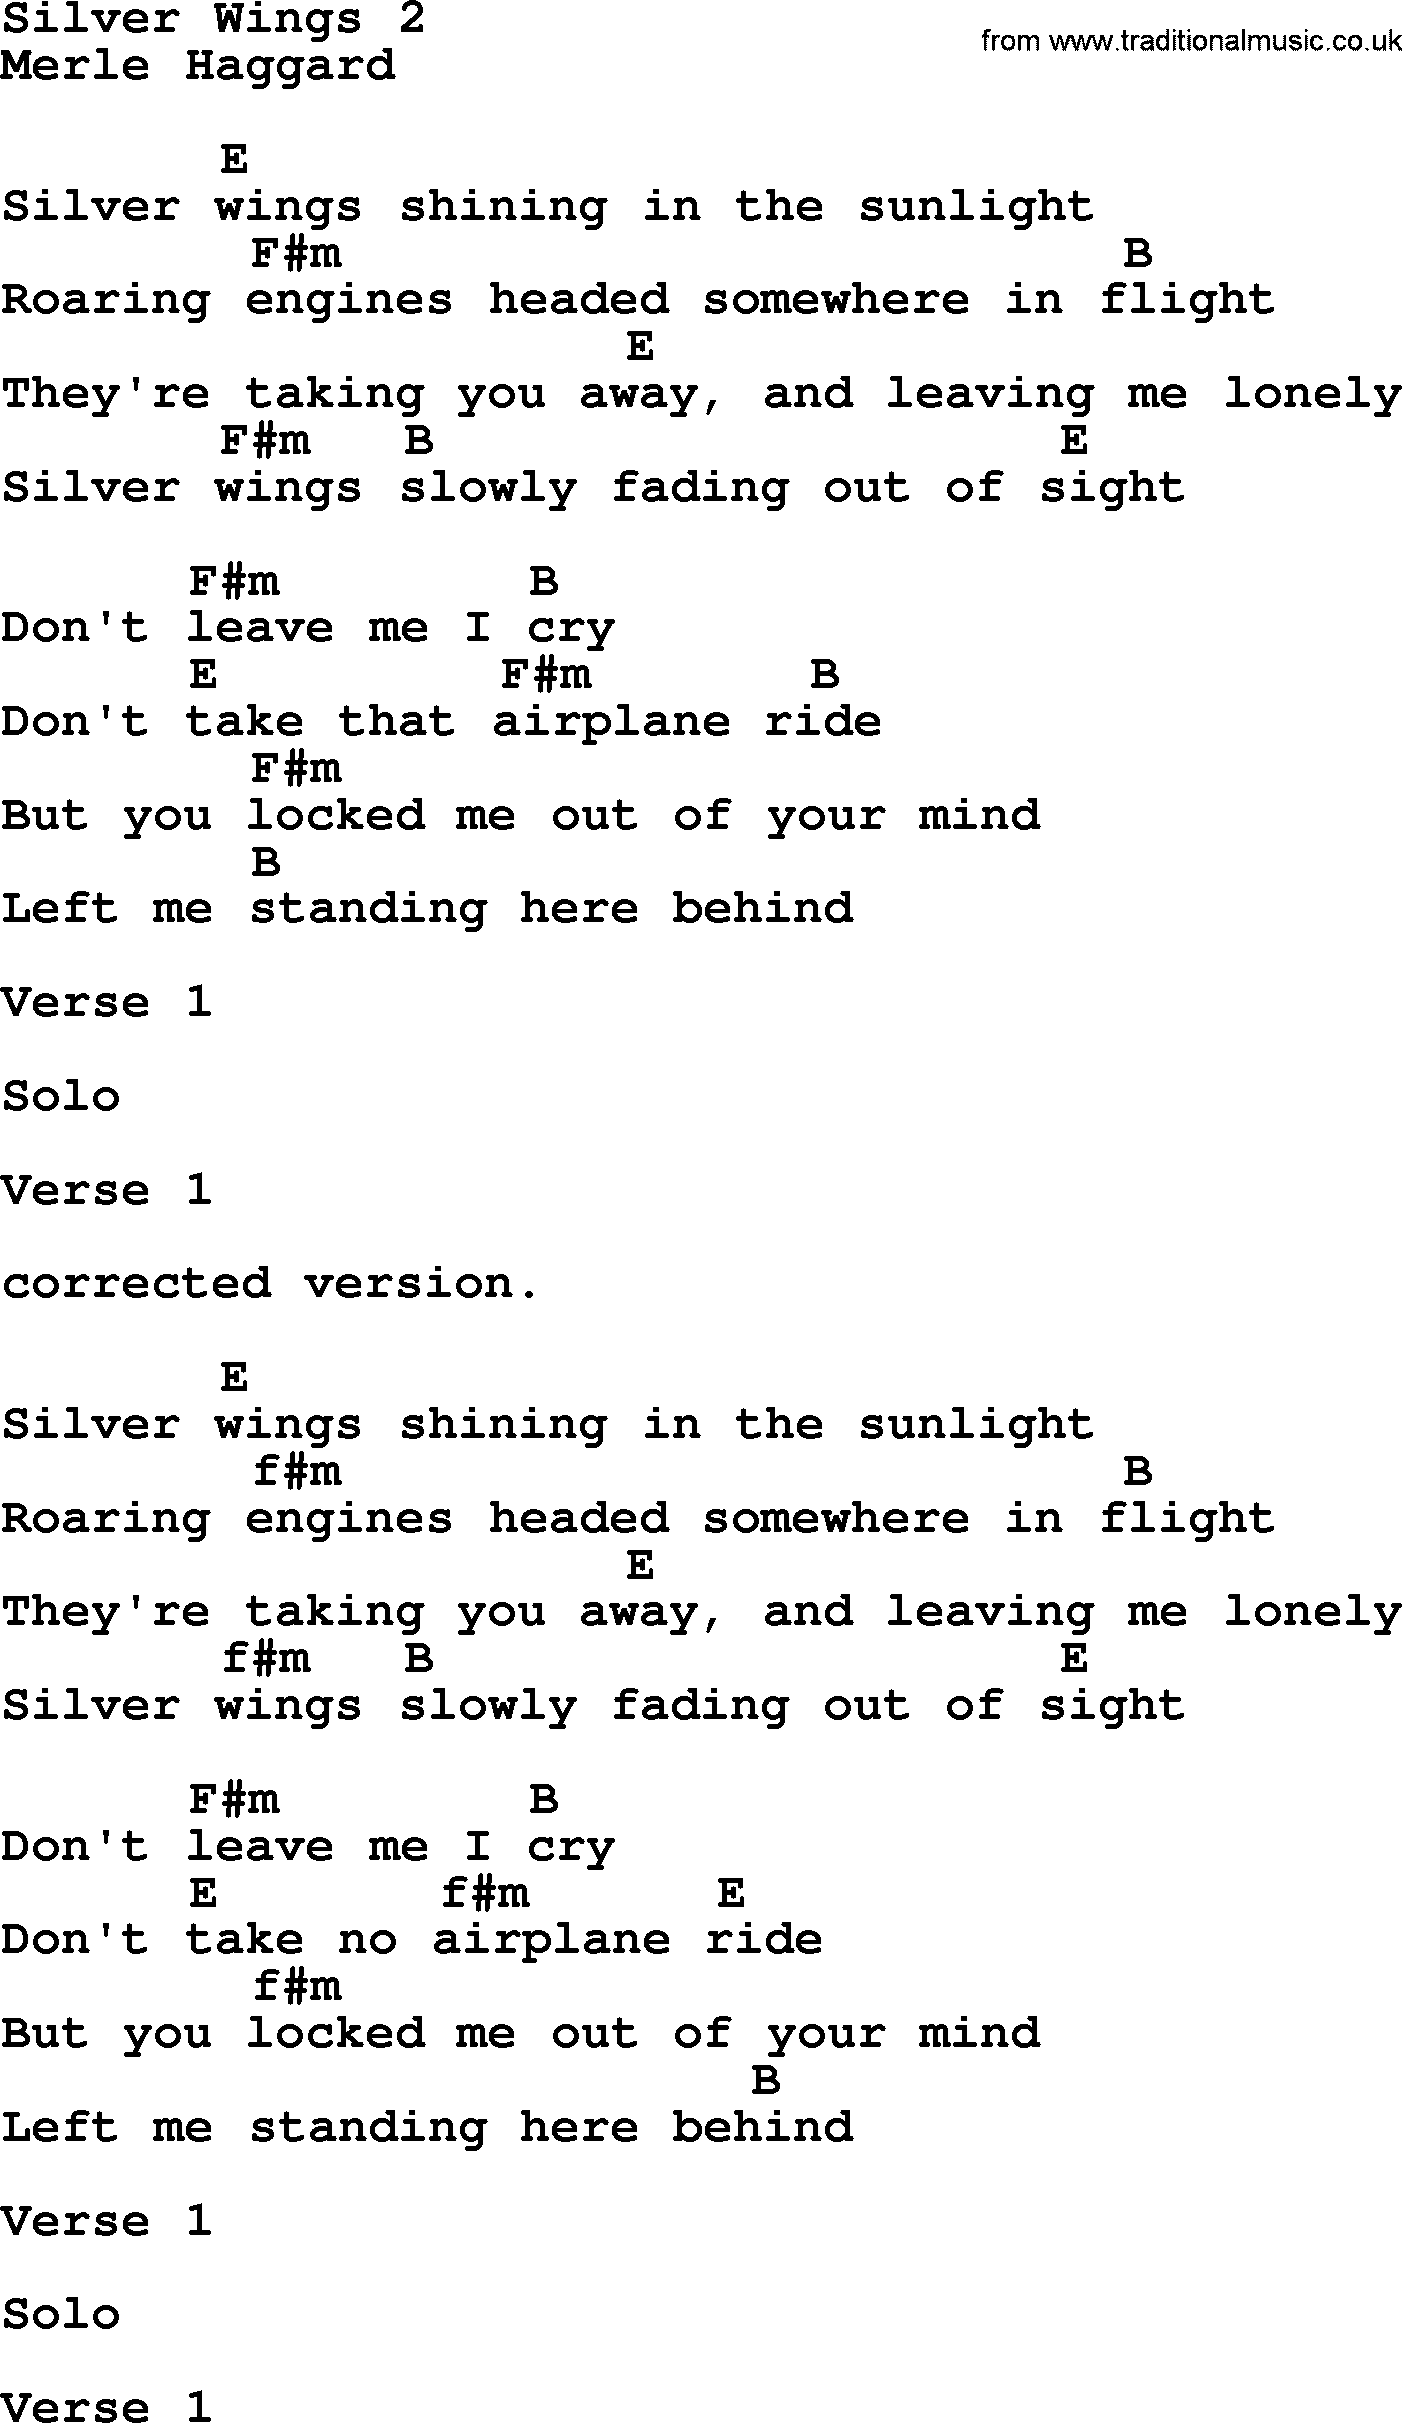 Merle Haggard song: Silver Wings 2, lyrics and chords